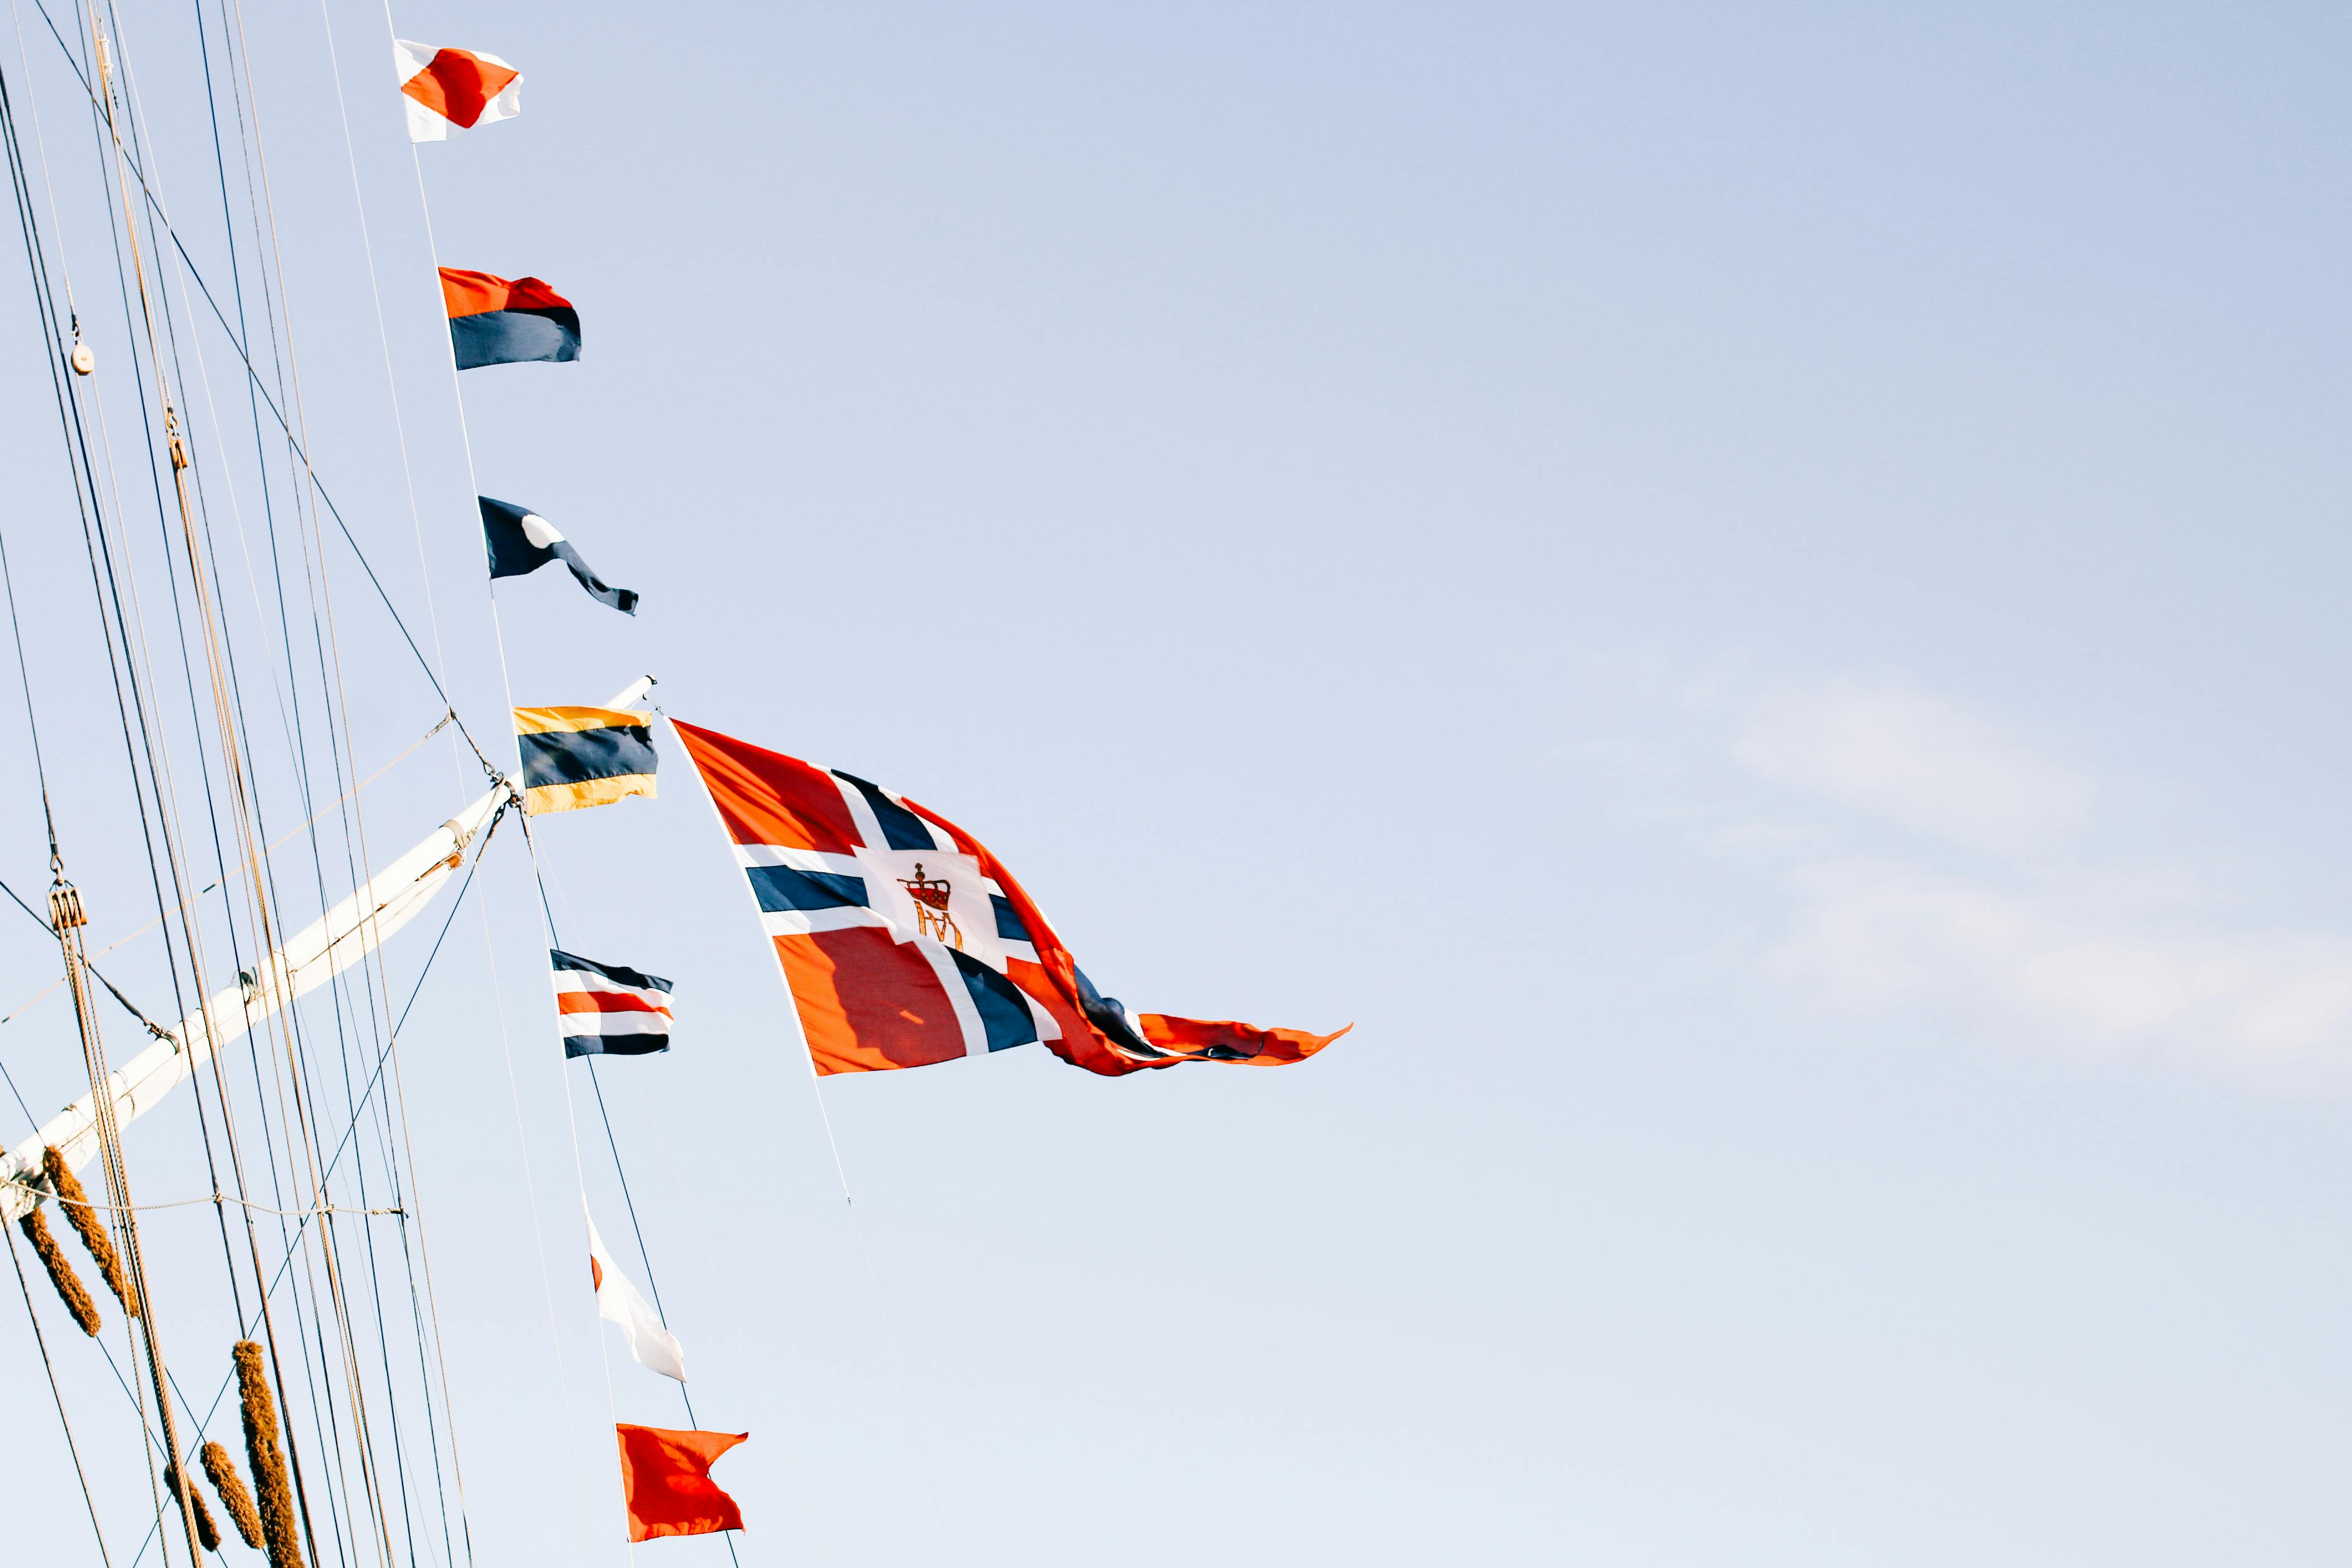 various flags waving on rope against blue sky